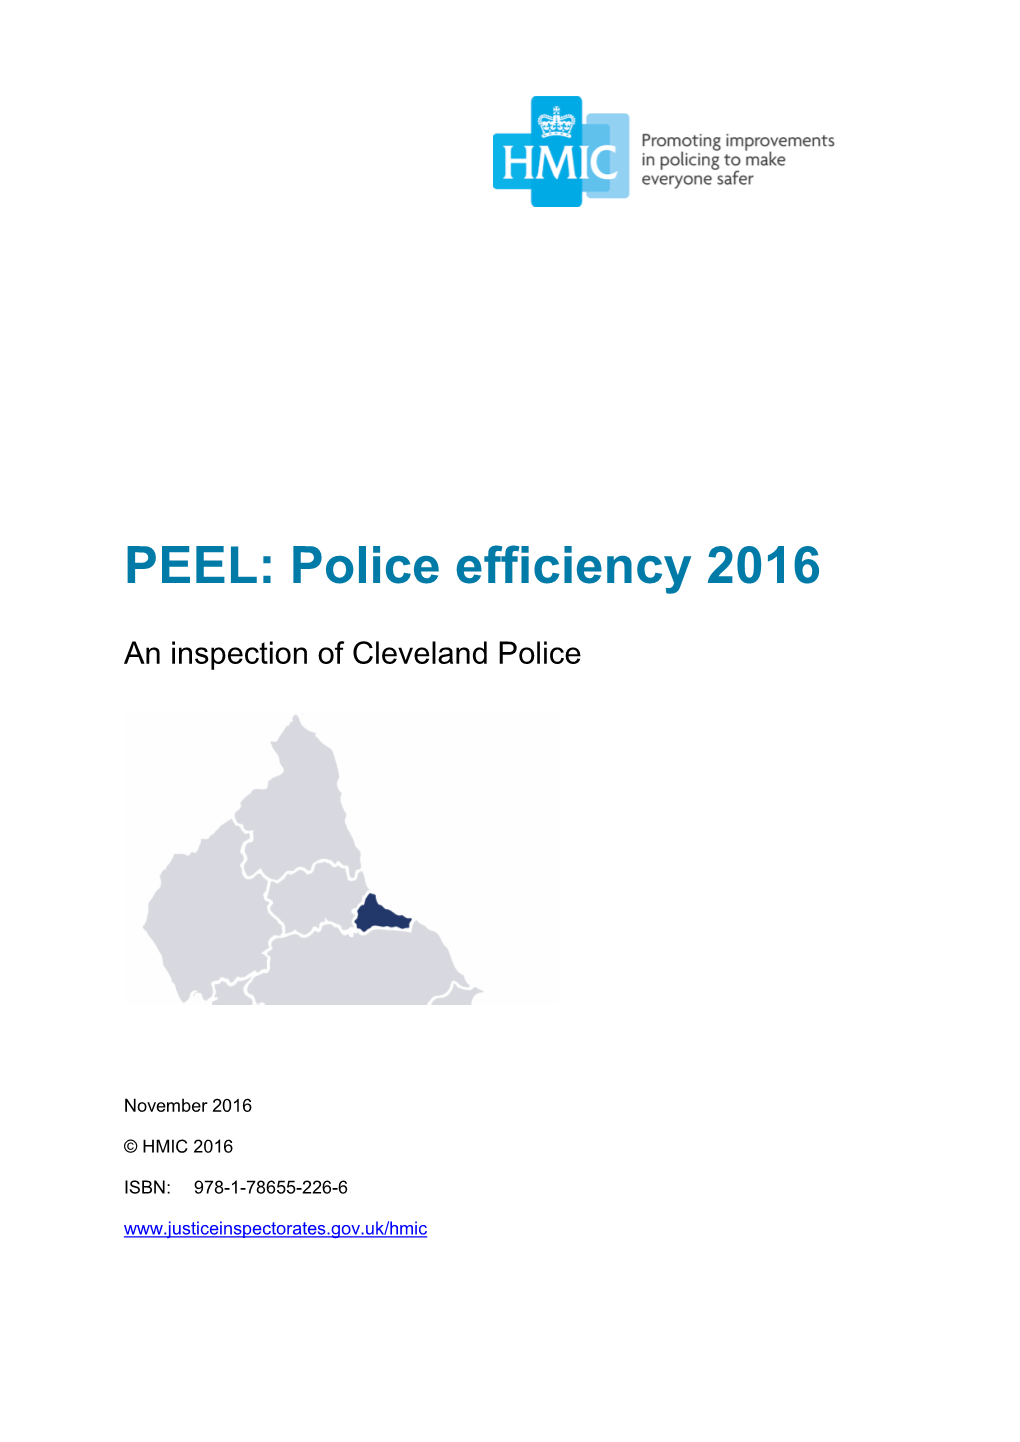 PEEL: Police Efficiency 2016 – Cleveland Police